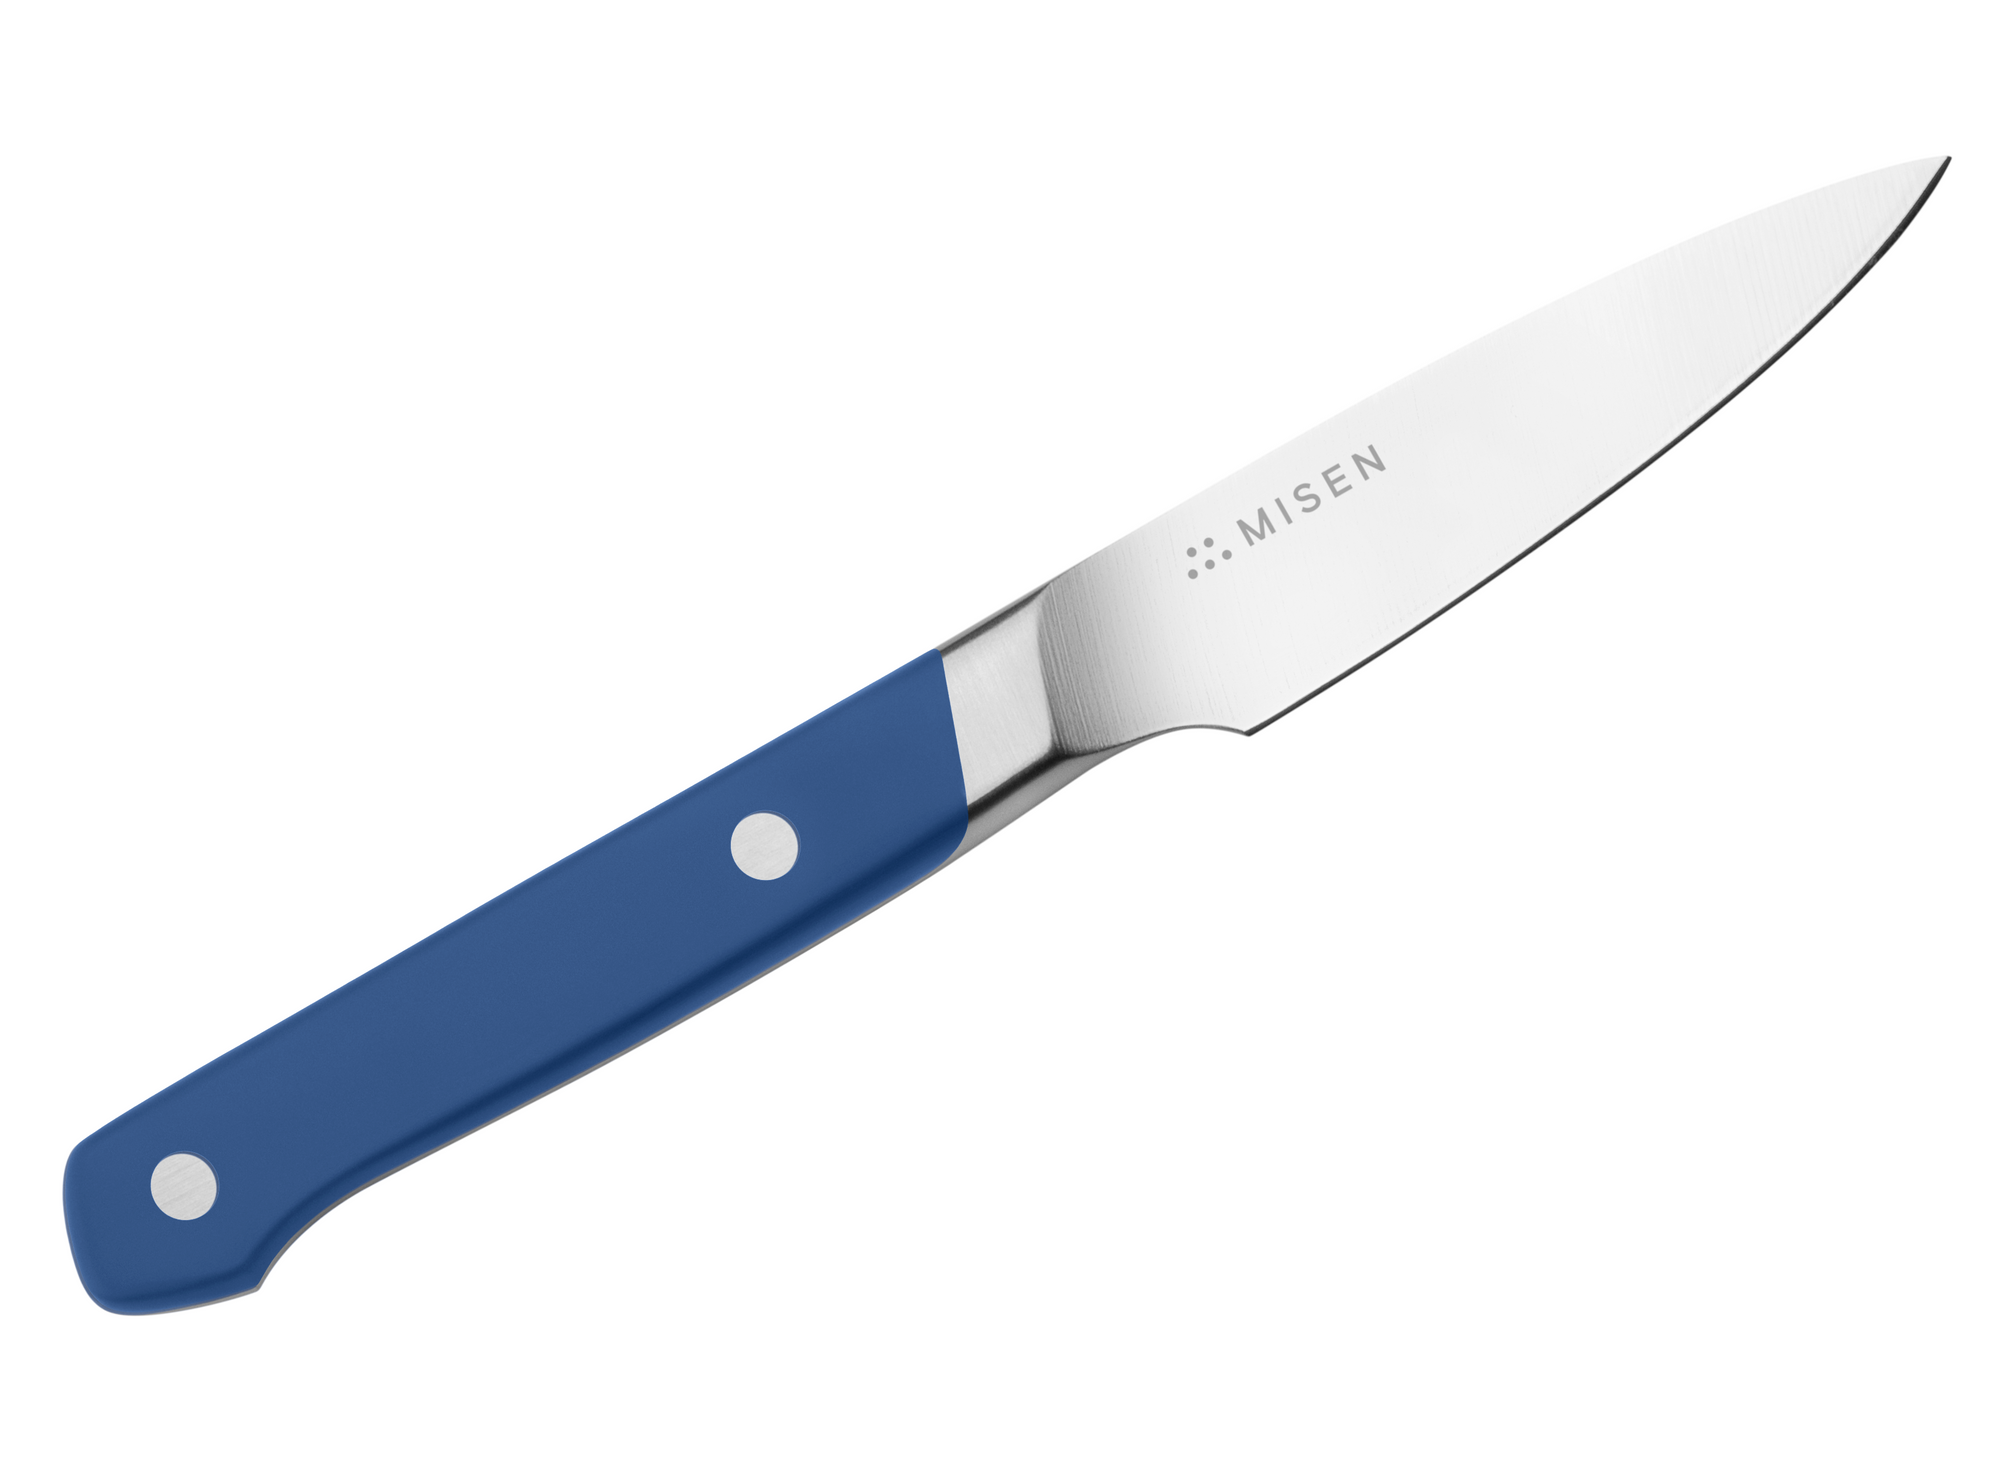 Essentials™ 3.5 Paring Knife